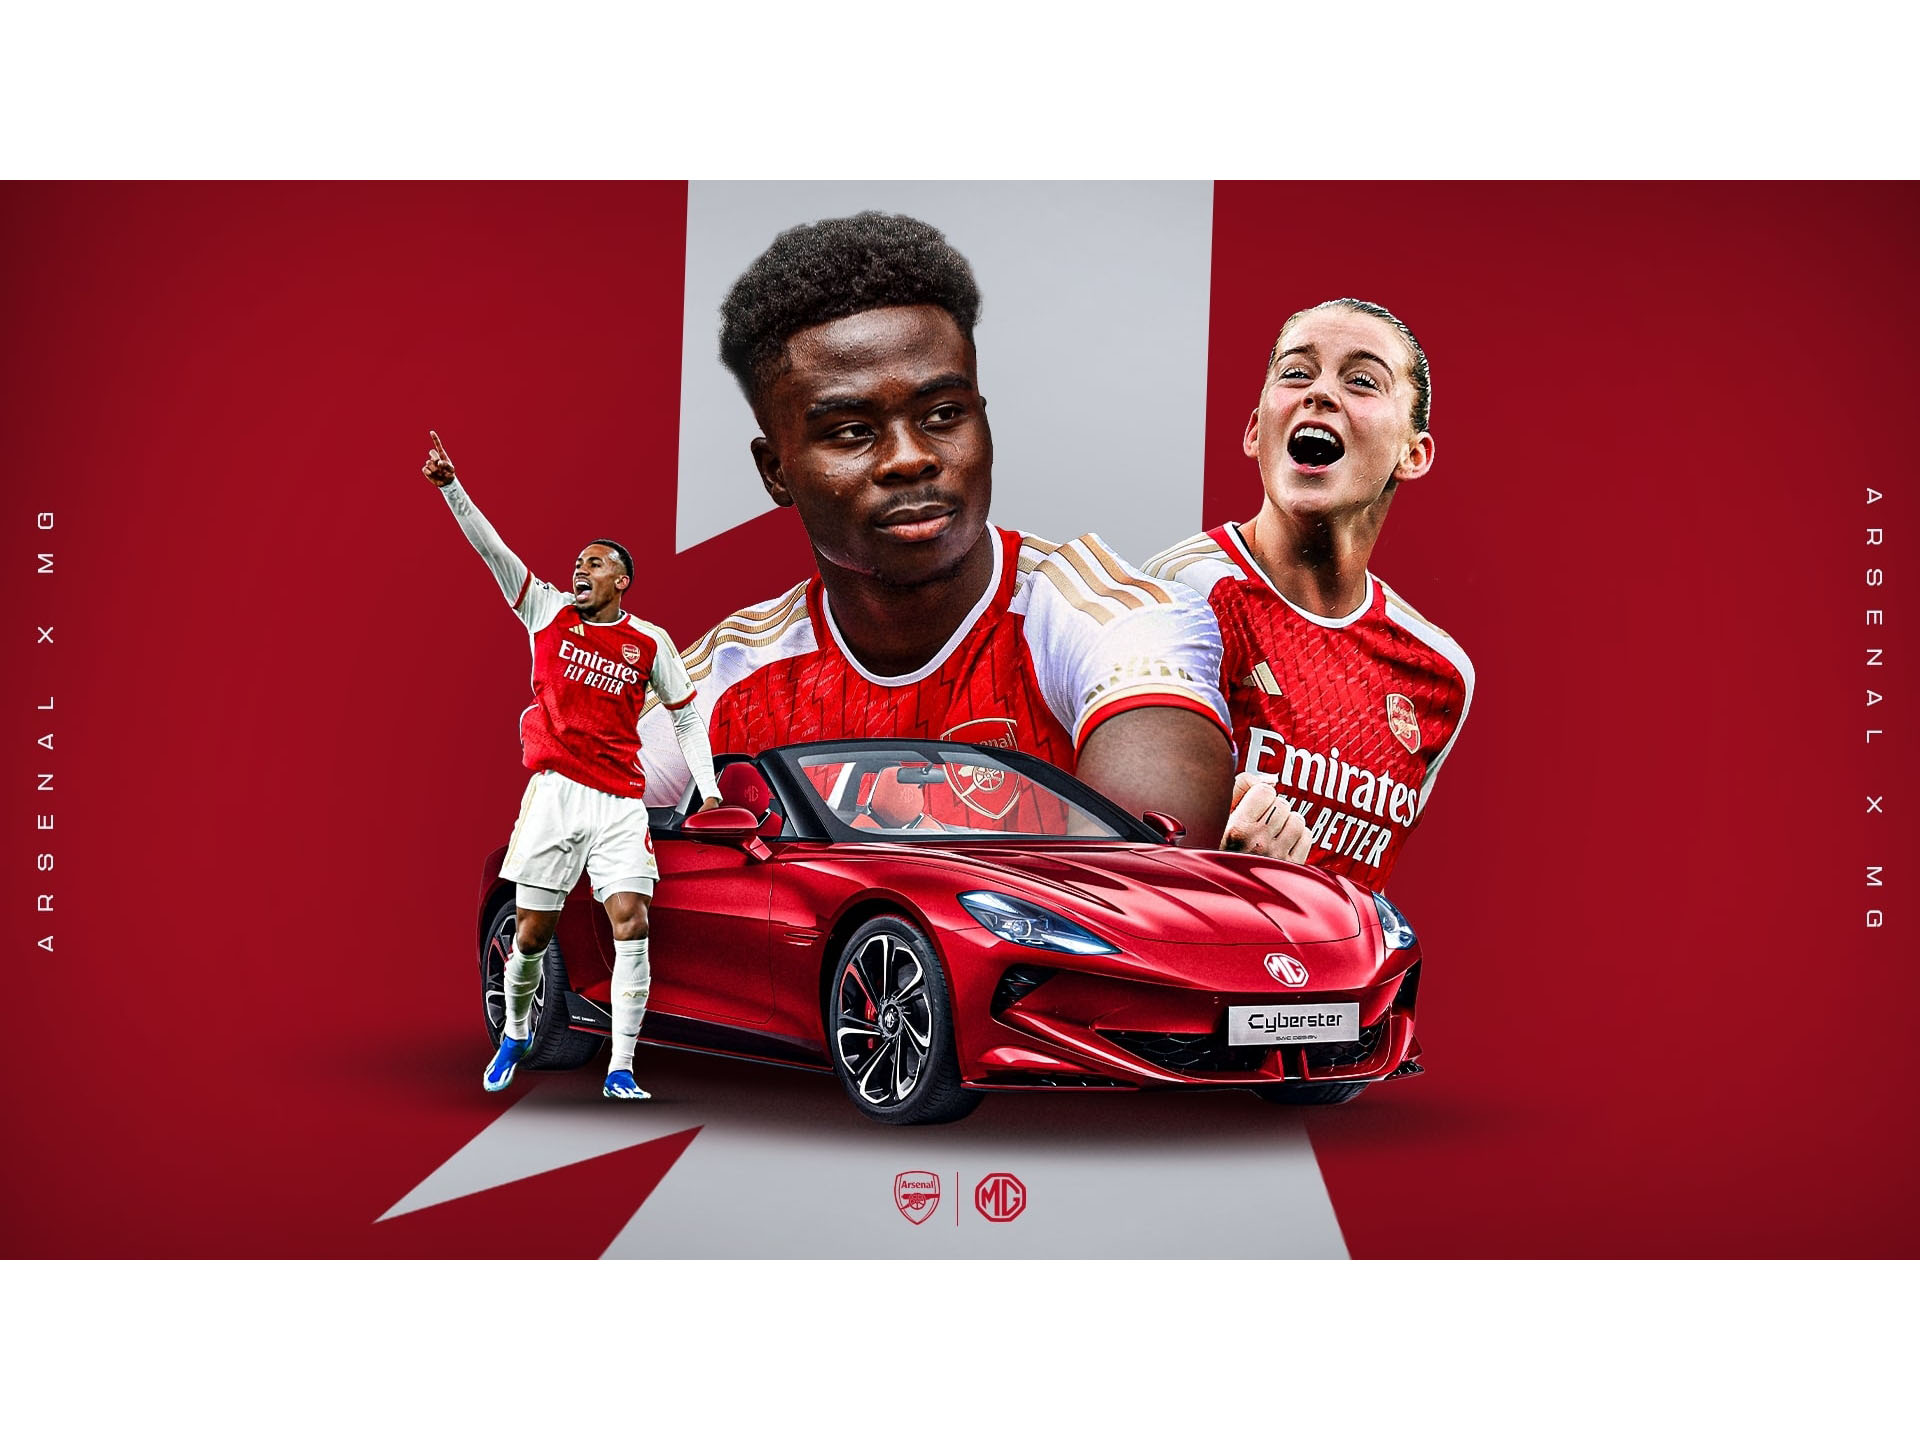 MG Motor named 'Official Automotive Partner' for Arsenal